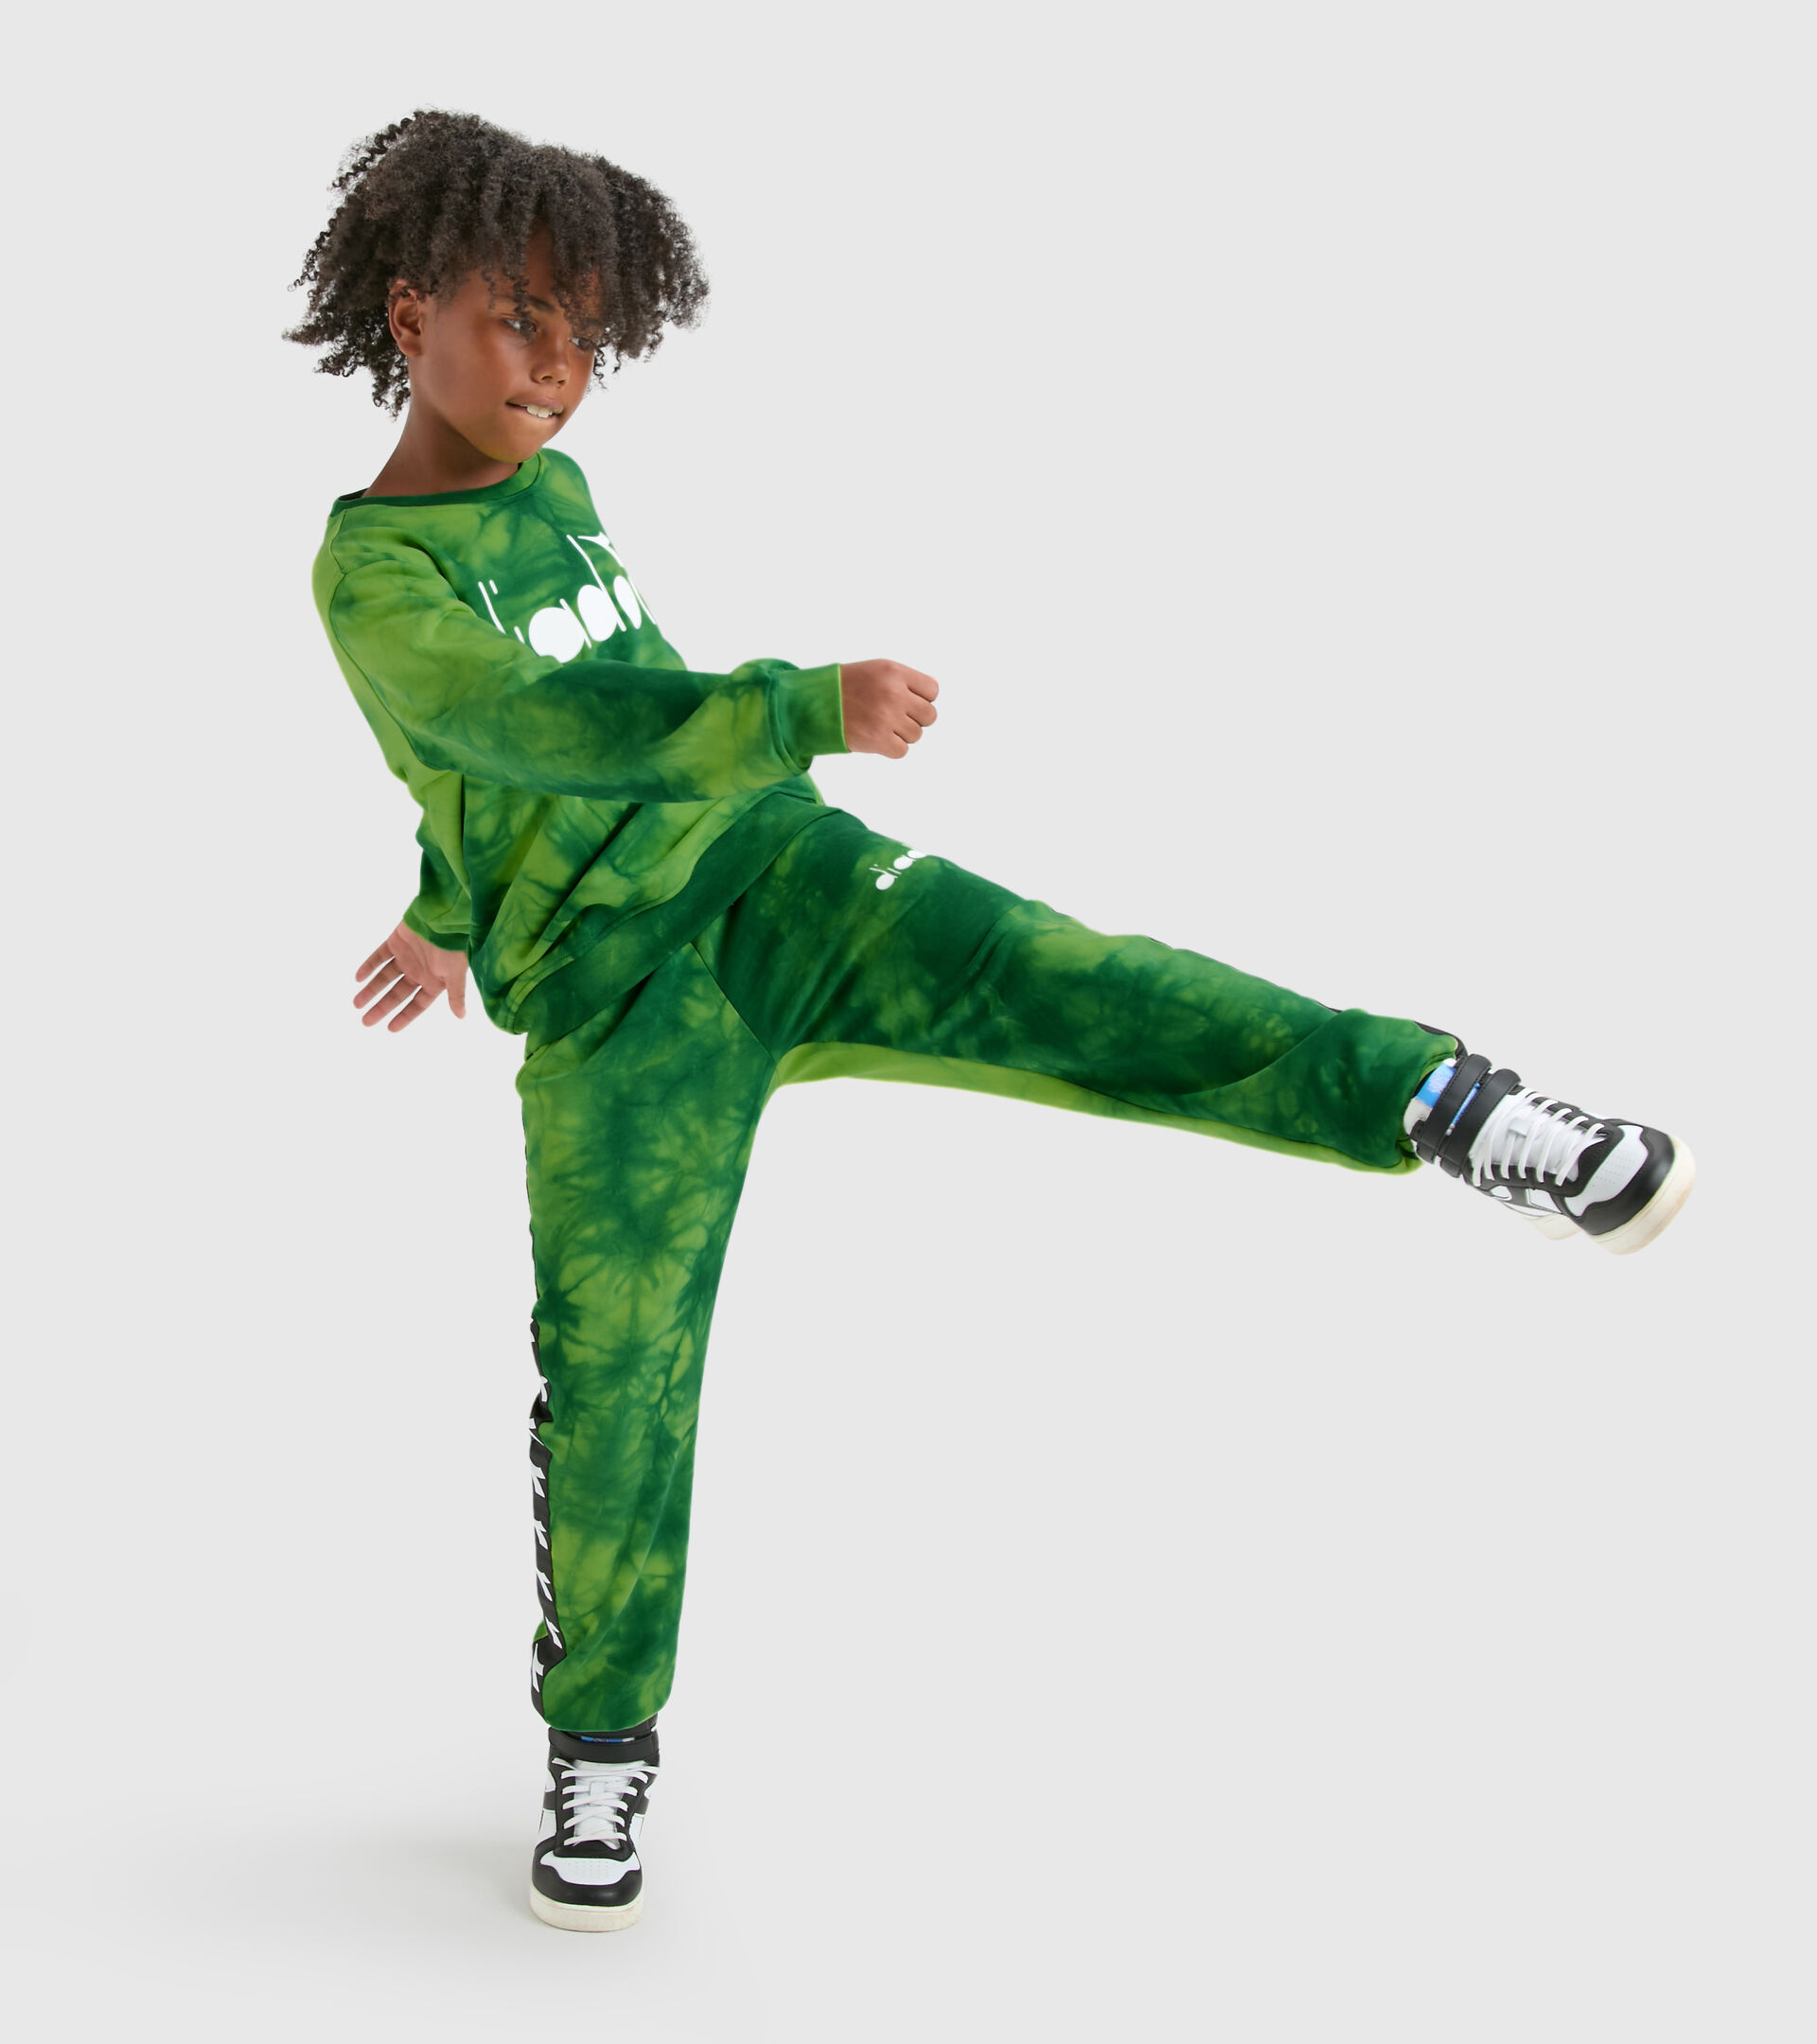 Green army sweatshirt - Boy JB.SWEATSHIRT CREW AO D NEUTRO(00001) - Diadora